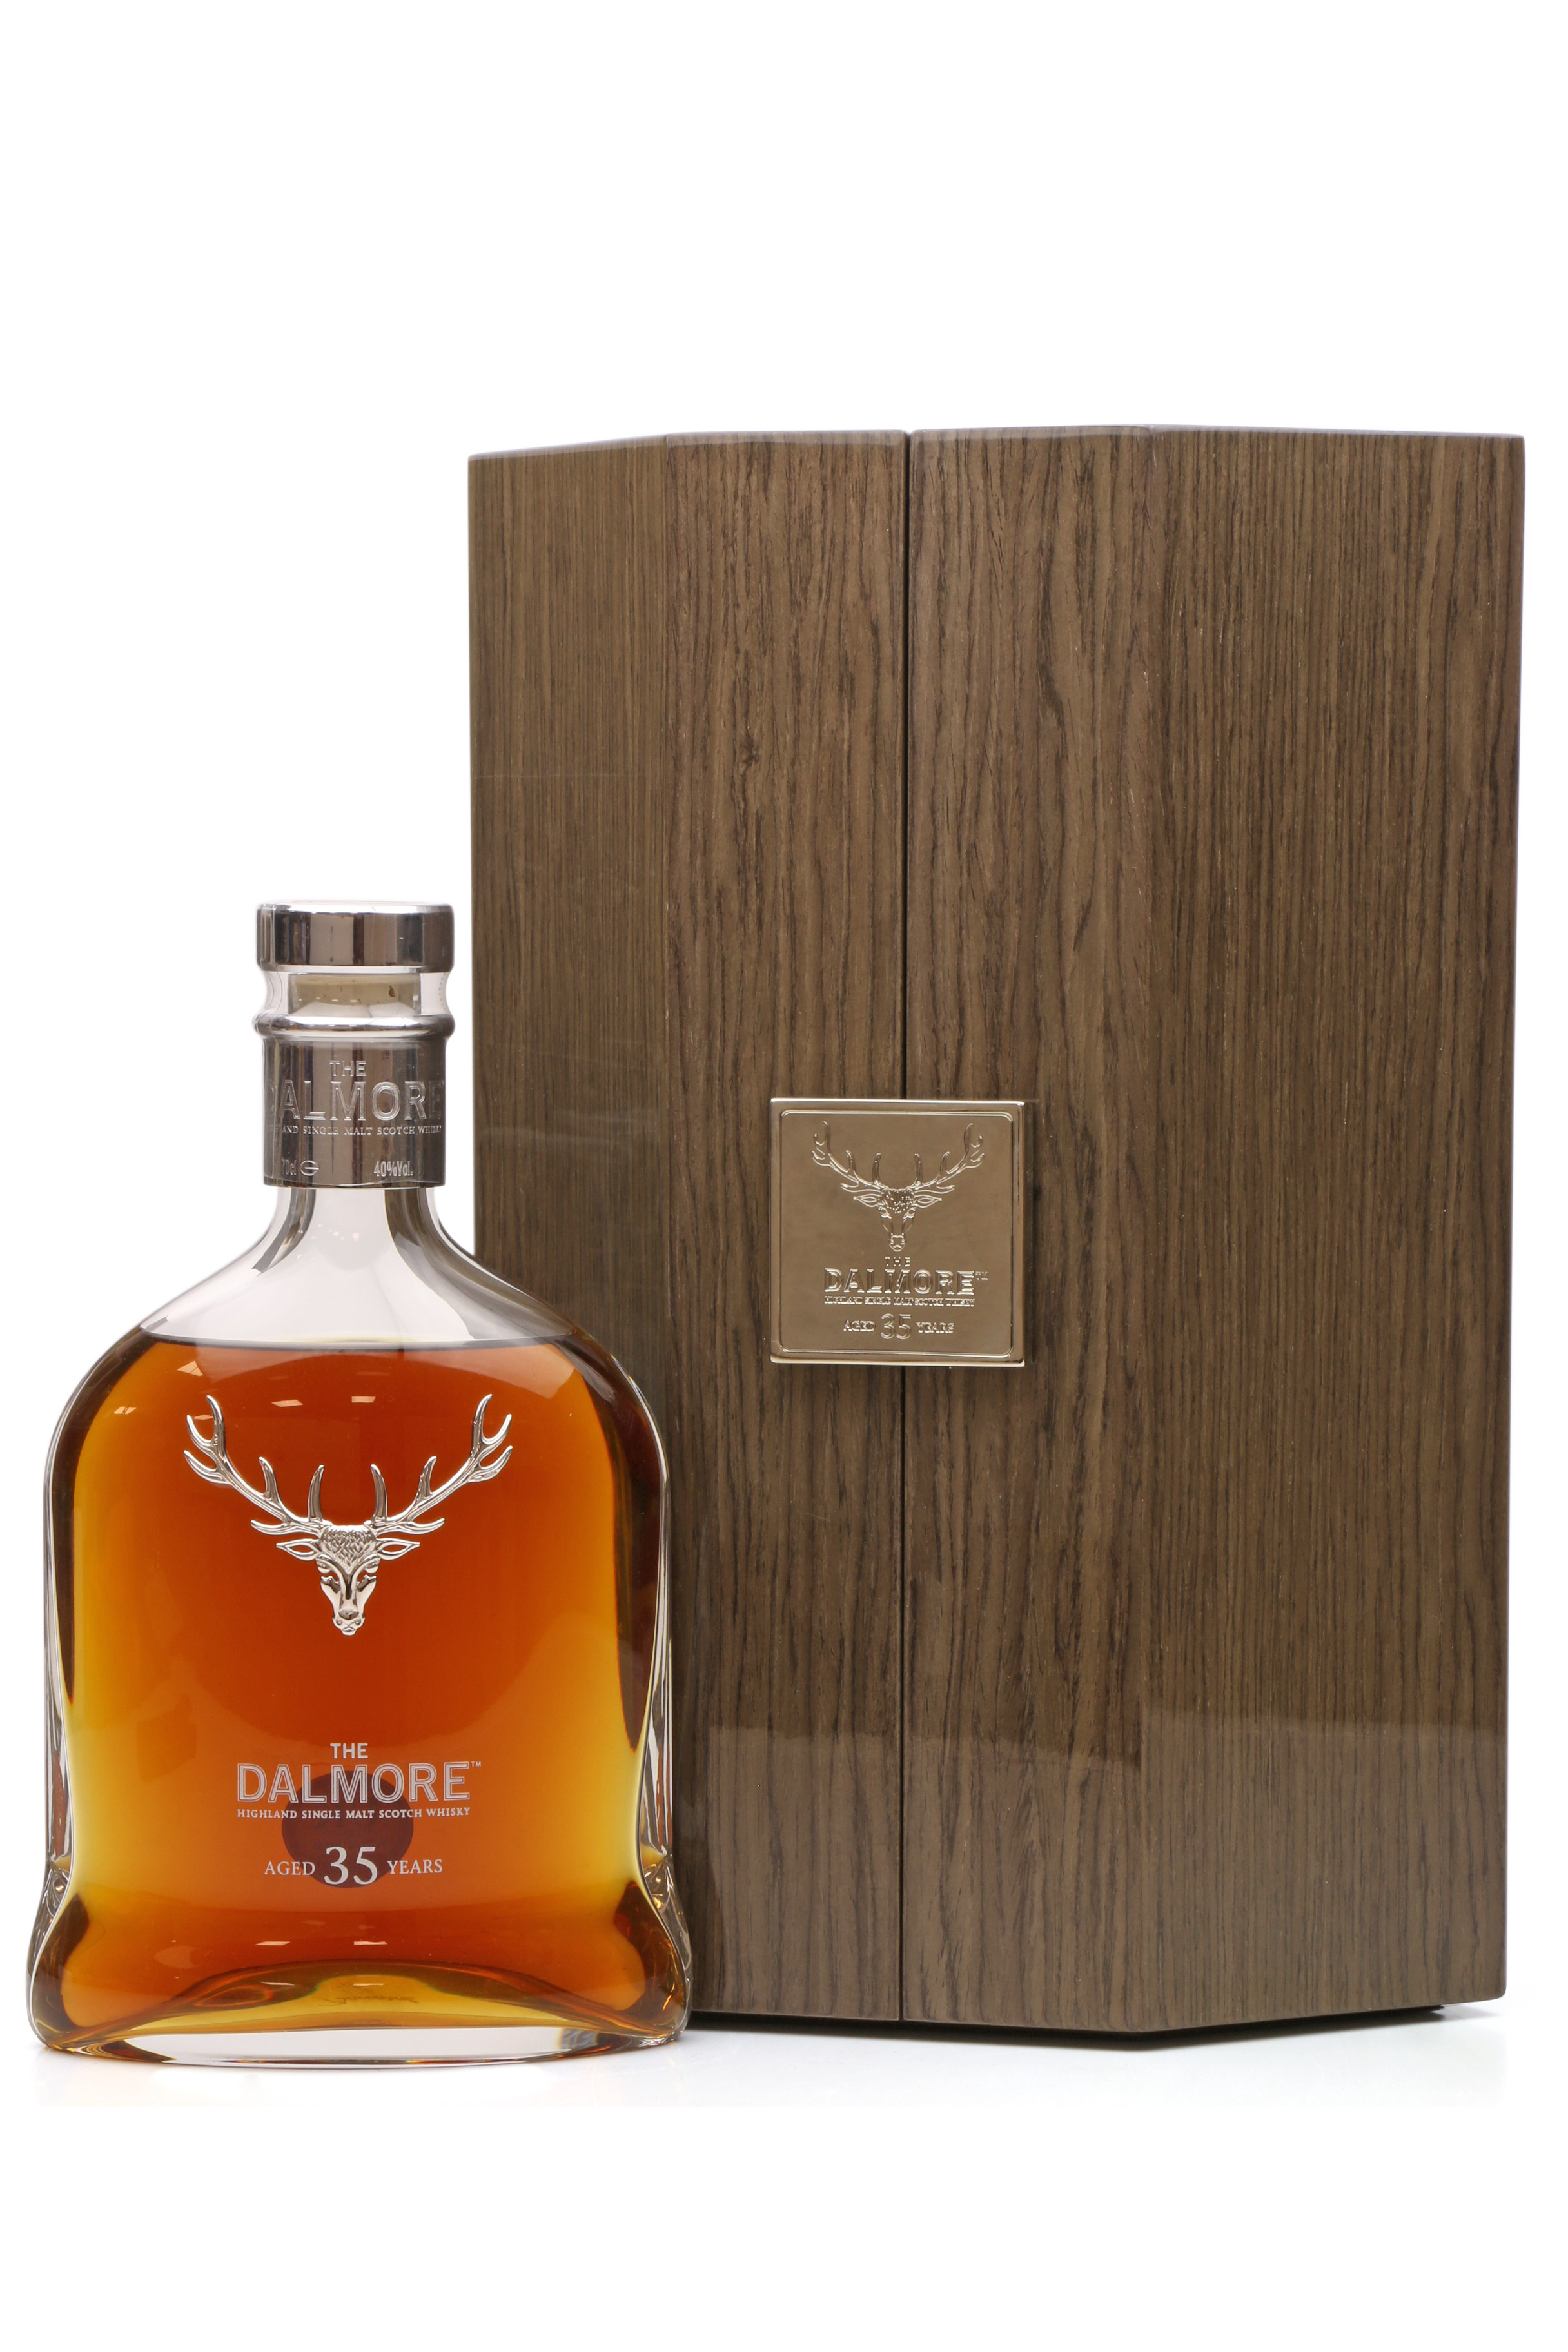 Dalmore 35 Year Single Malt Scotch Whisky